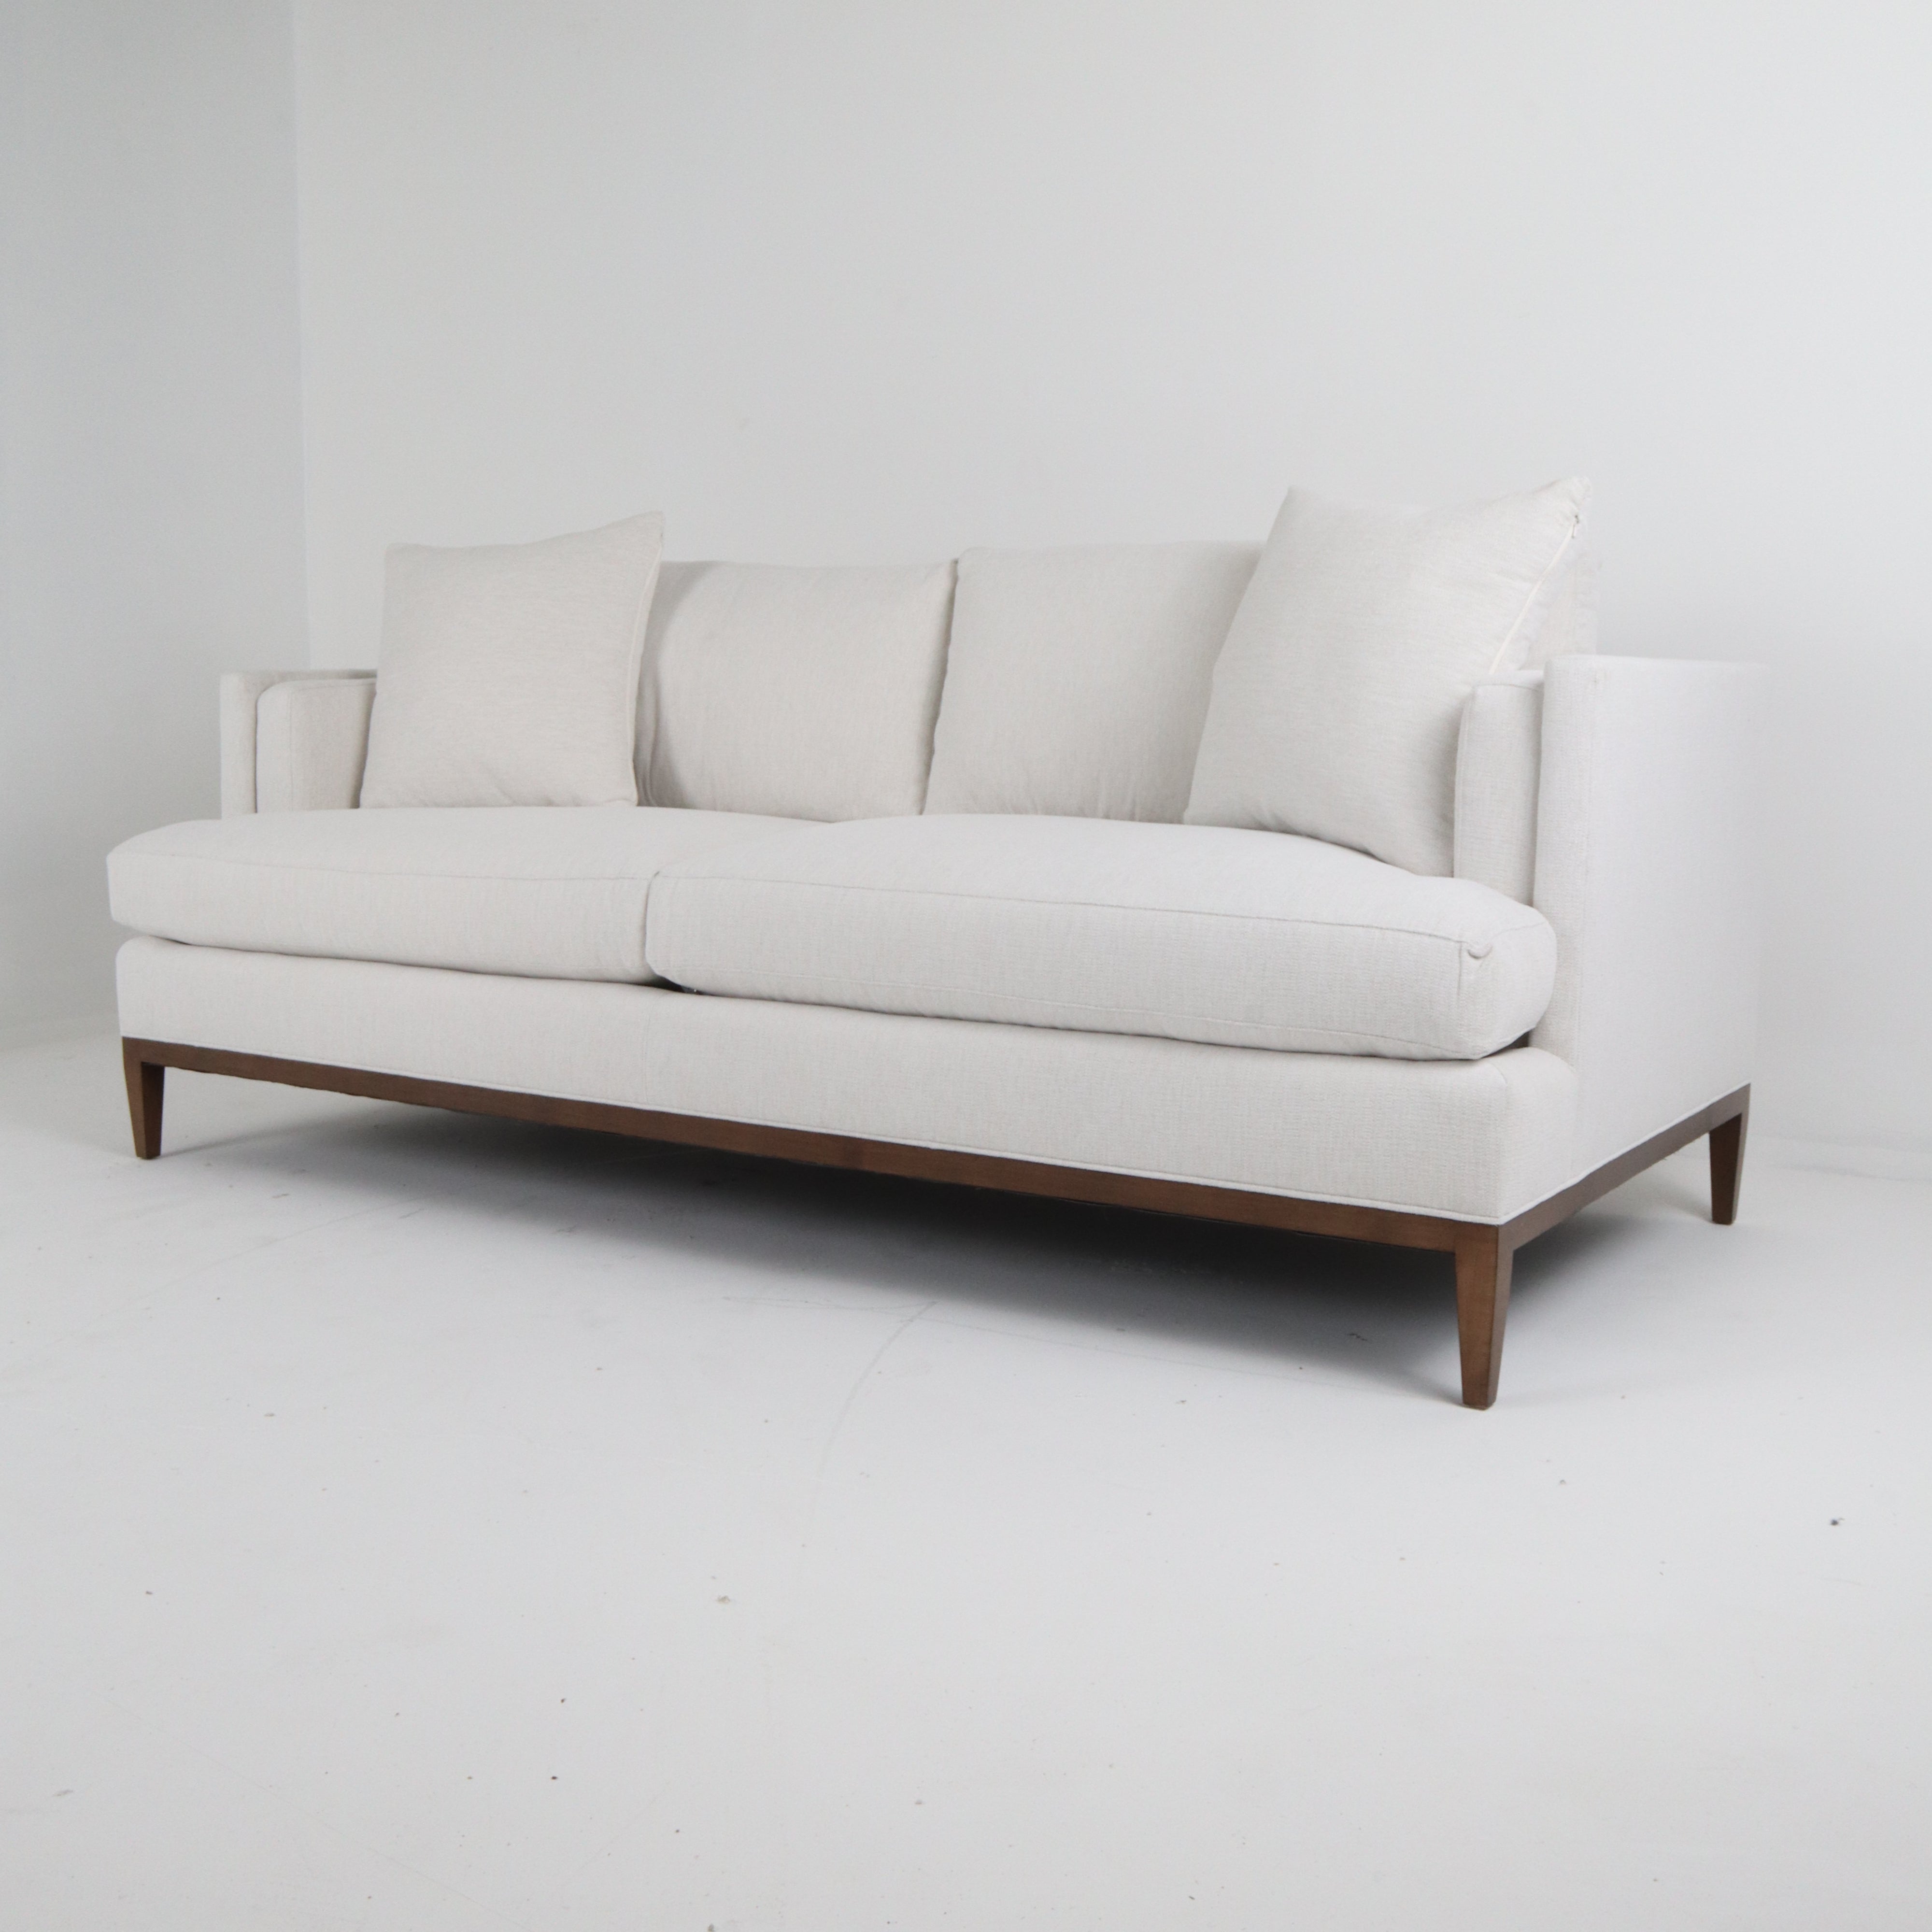 The Peretti Long Sofa